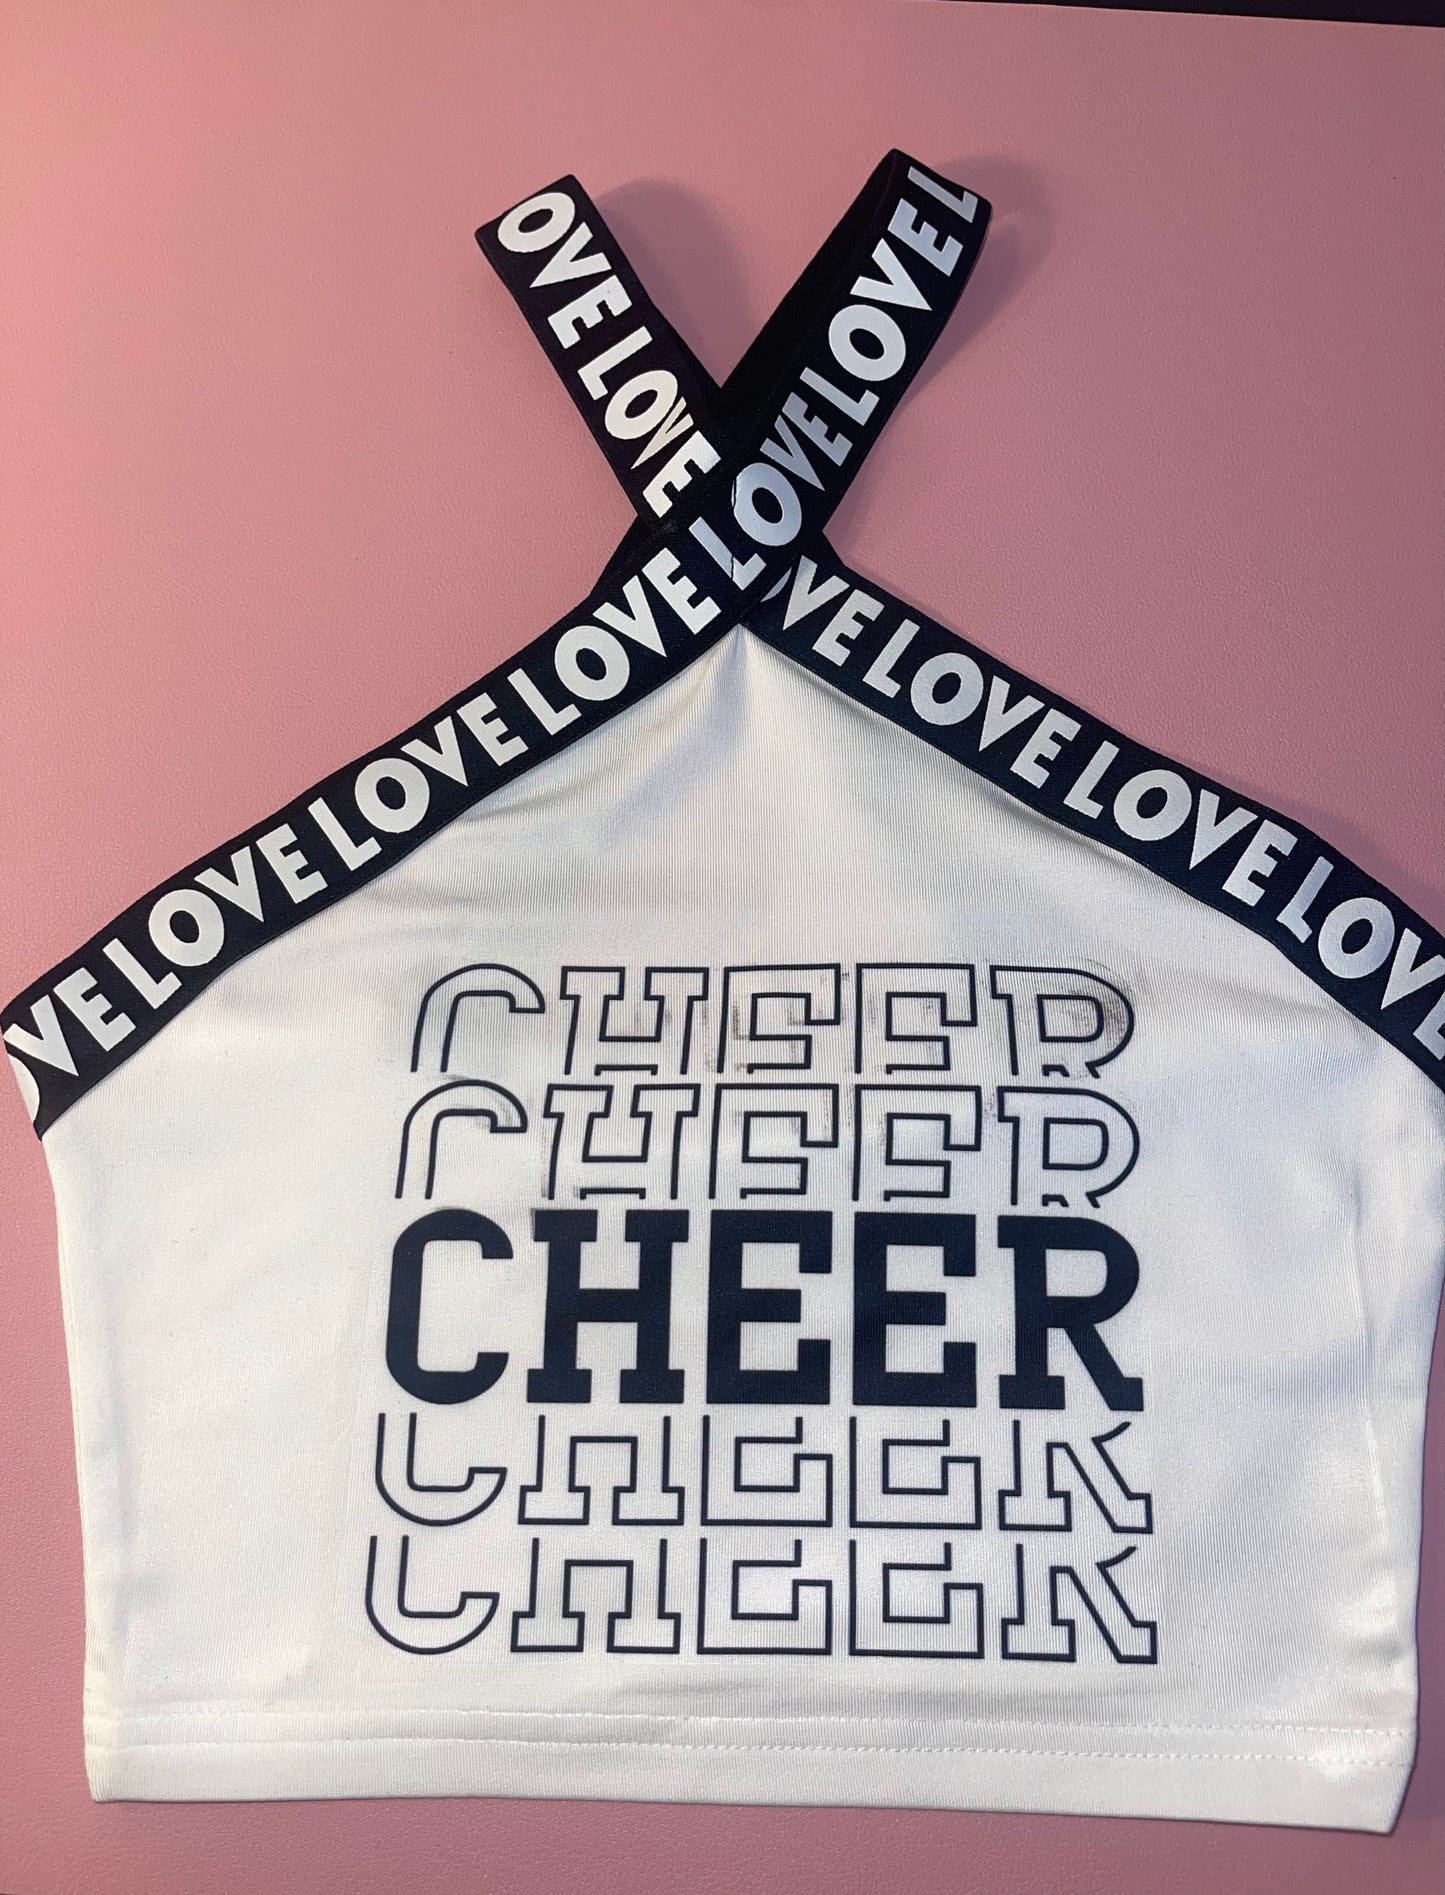 Love cheer (oppsies)